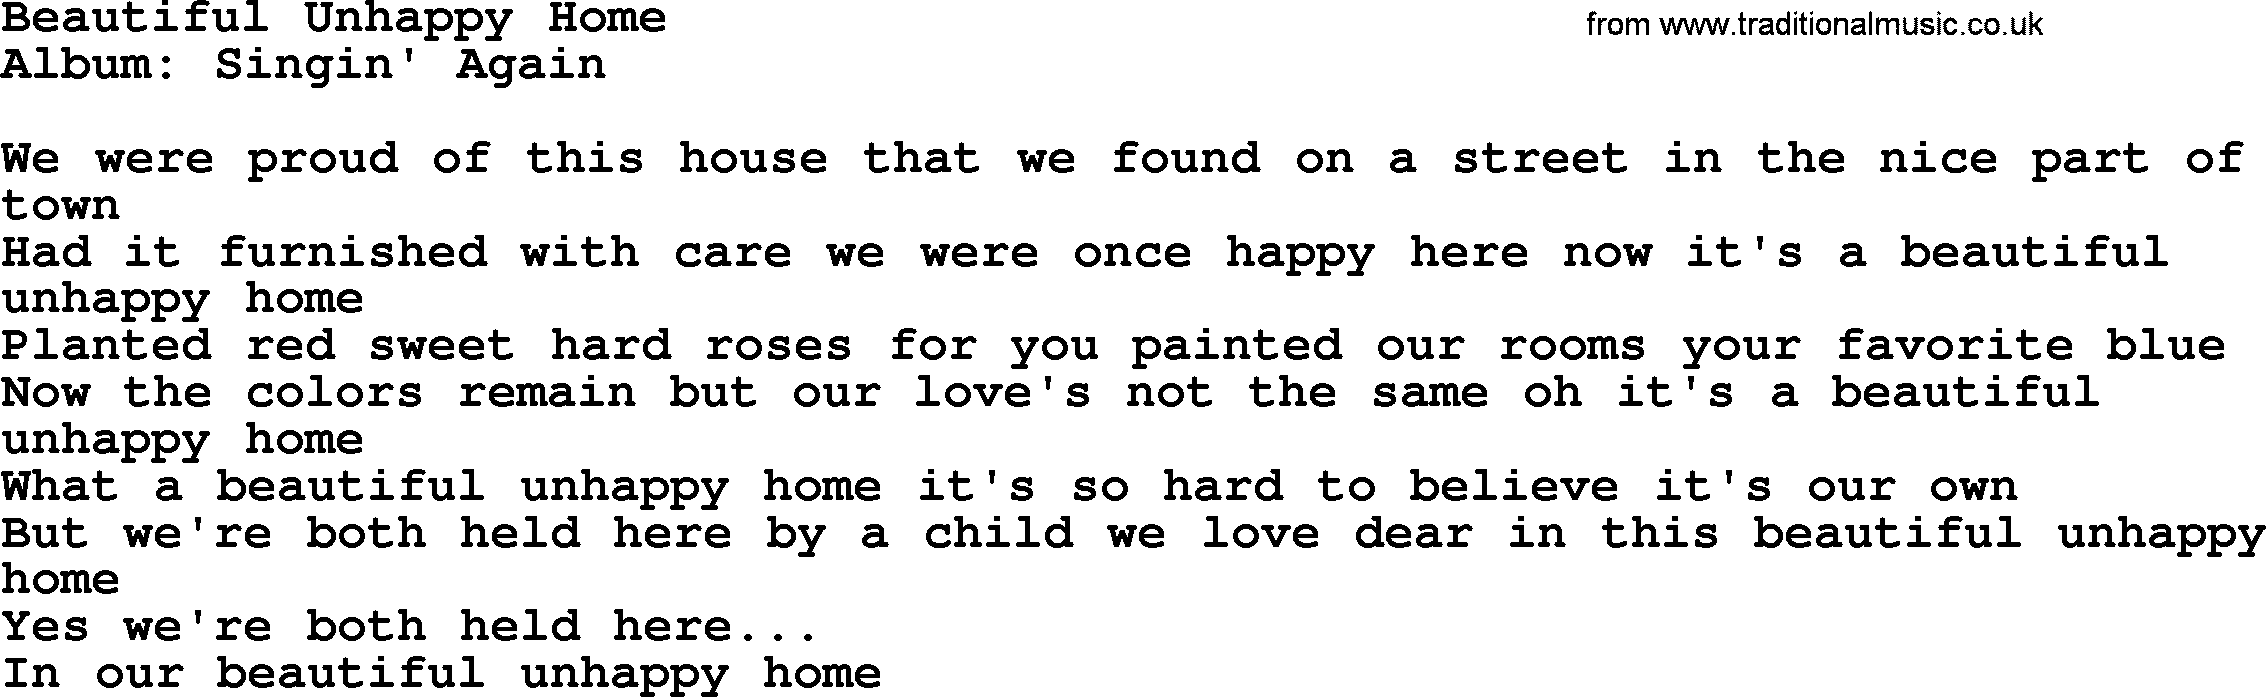 Loretta Lynn song: Beautiful Unhappy Home lyrics